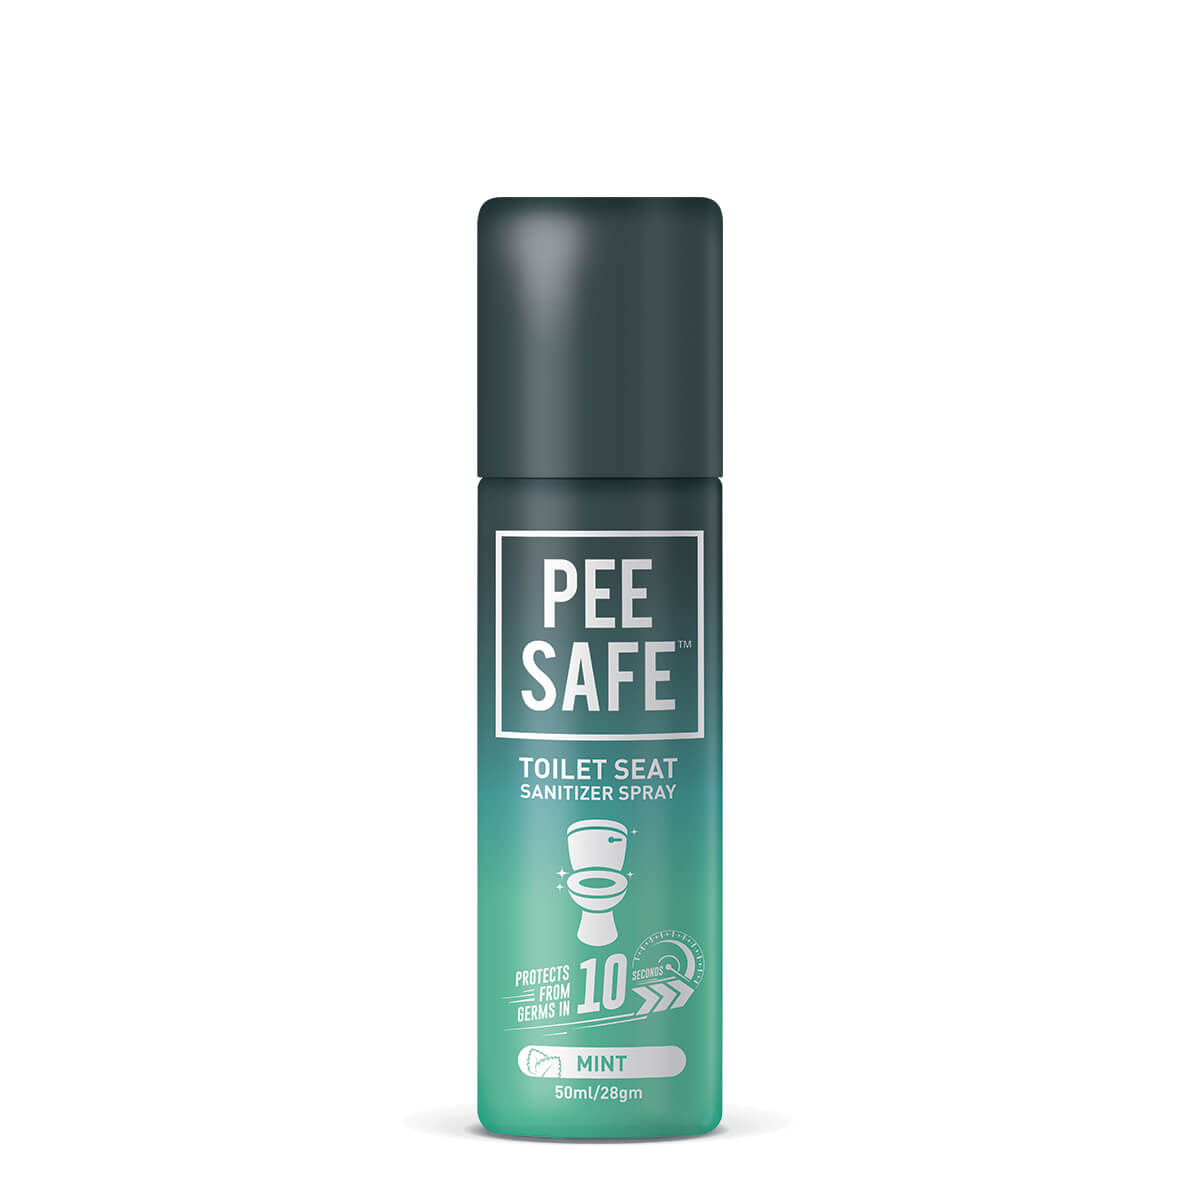 Peesafe - Toilet Seat Sanitizer Spray 50 Ml Mint 